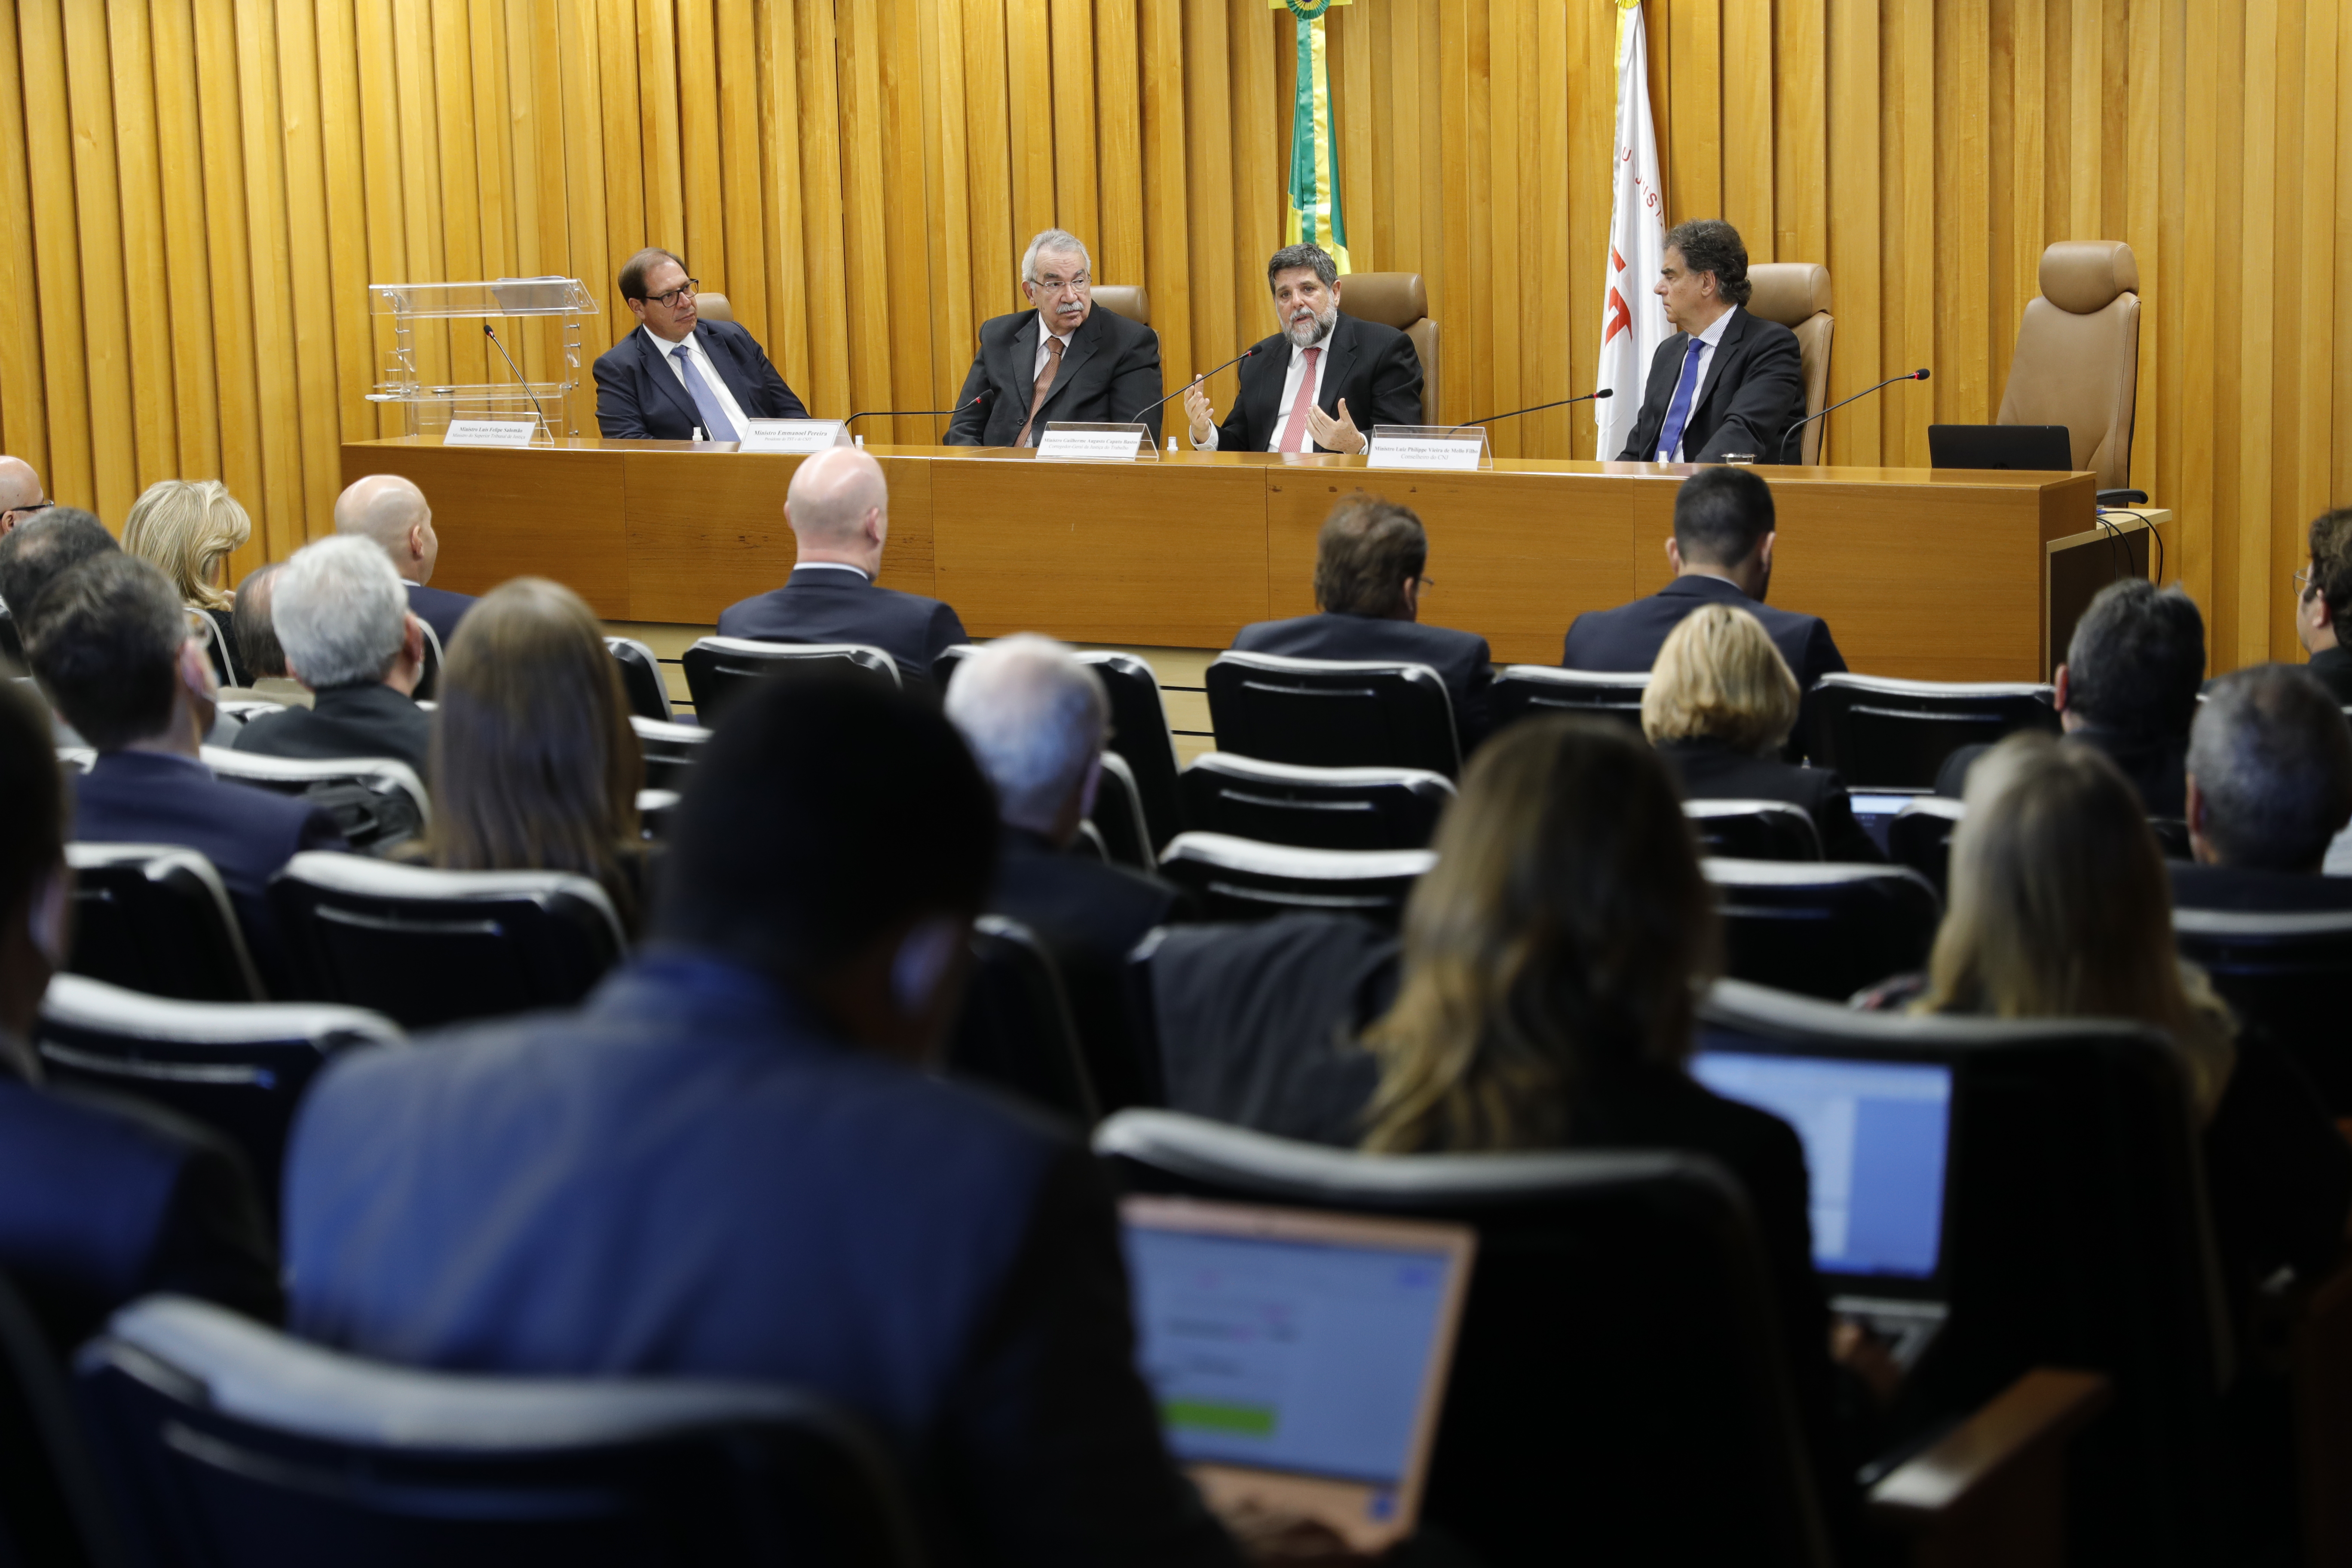 Mesa de abertura: ministros Luis Felipe Salomão (STJ), Emmanoel Pereira (TST), Caputo Bastos (TST) e Vieira de Mello Filho (TST). (Foto: Felipe Sampaio - Secom/TST)